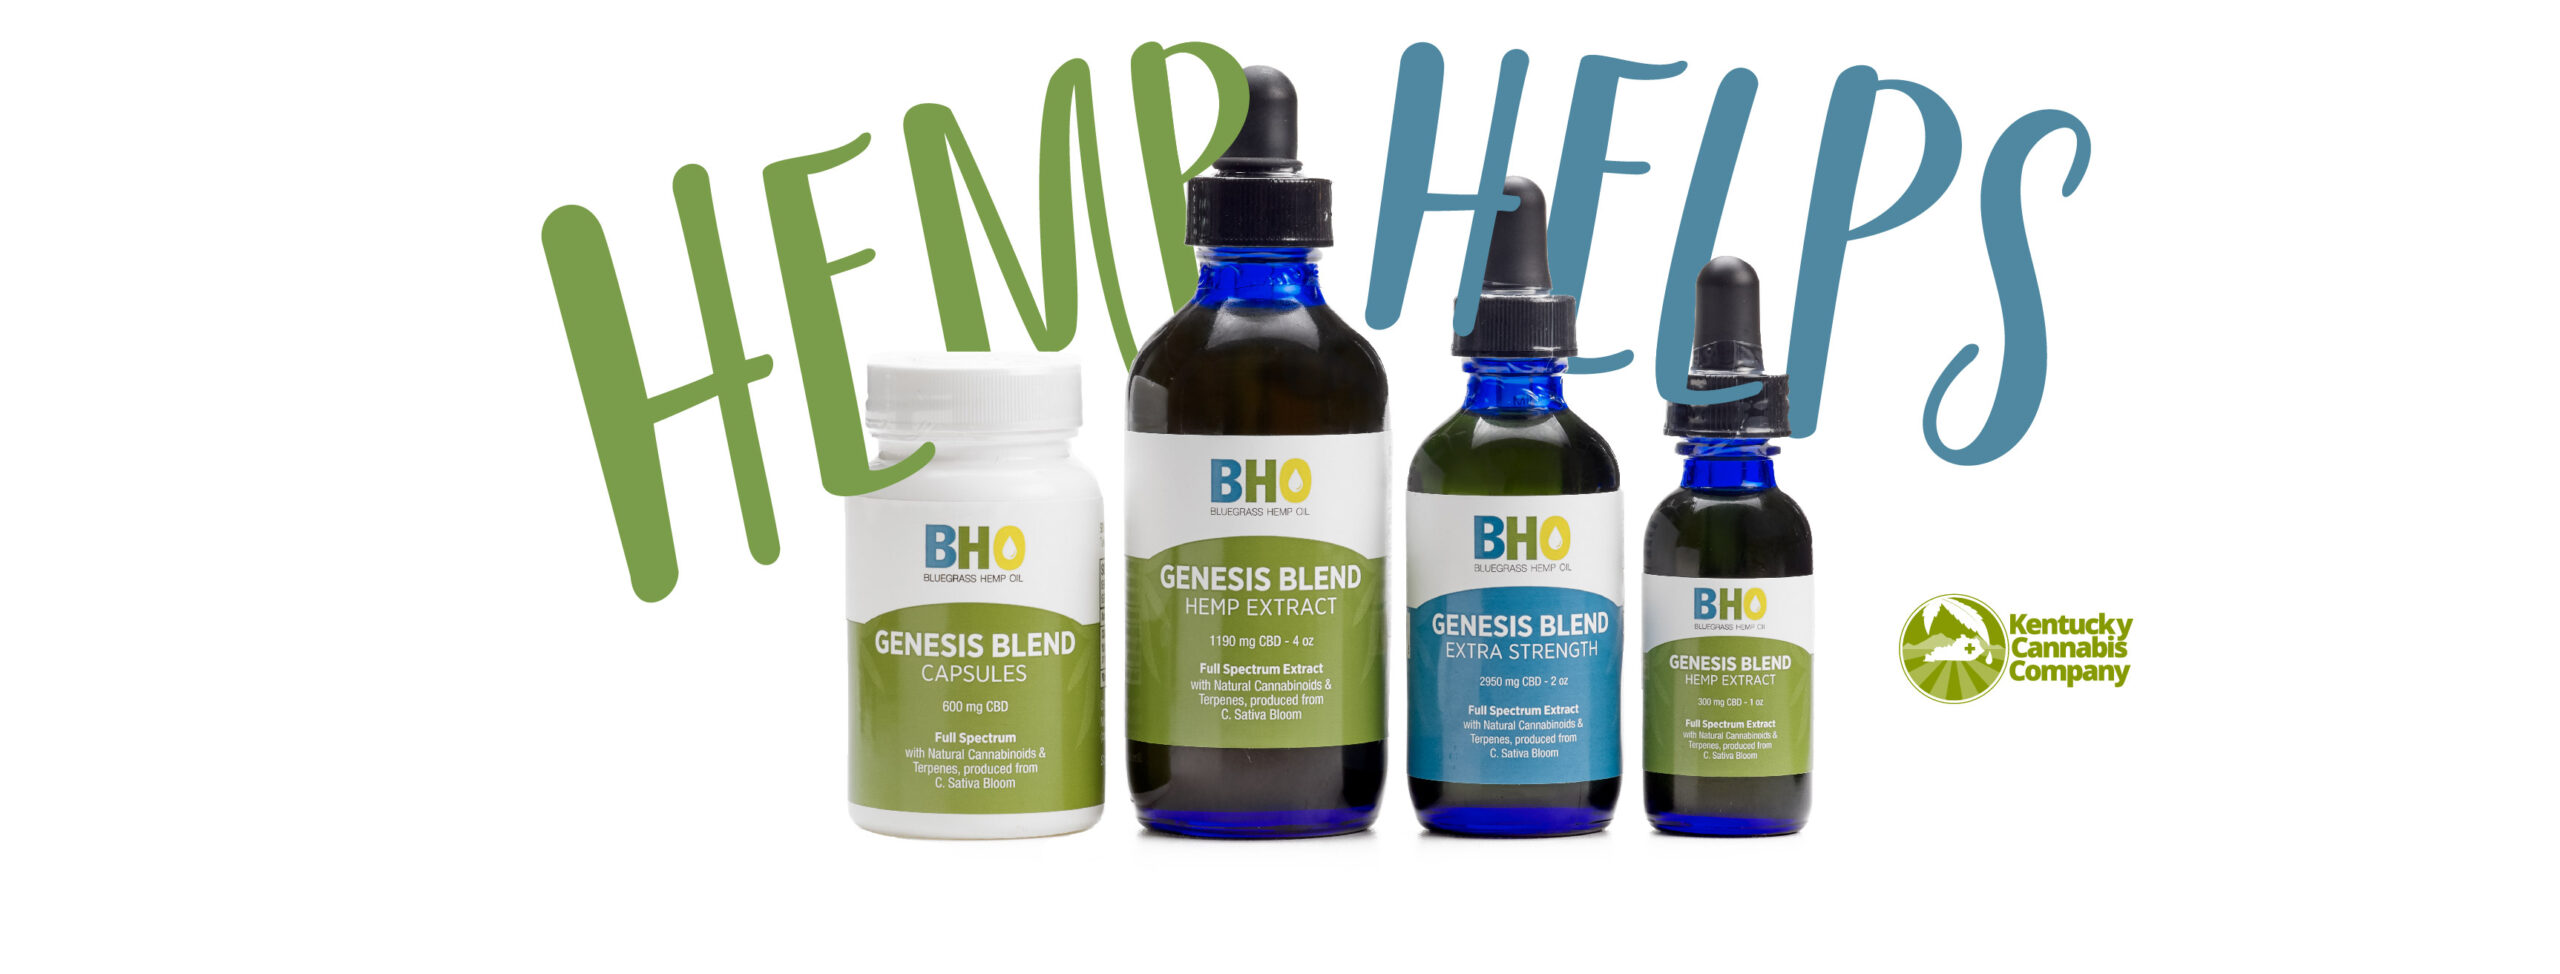 hemp helps line up of CBD products